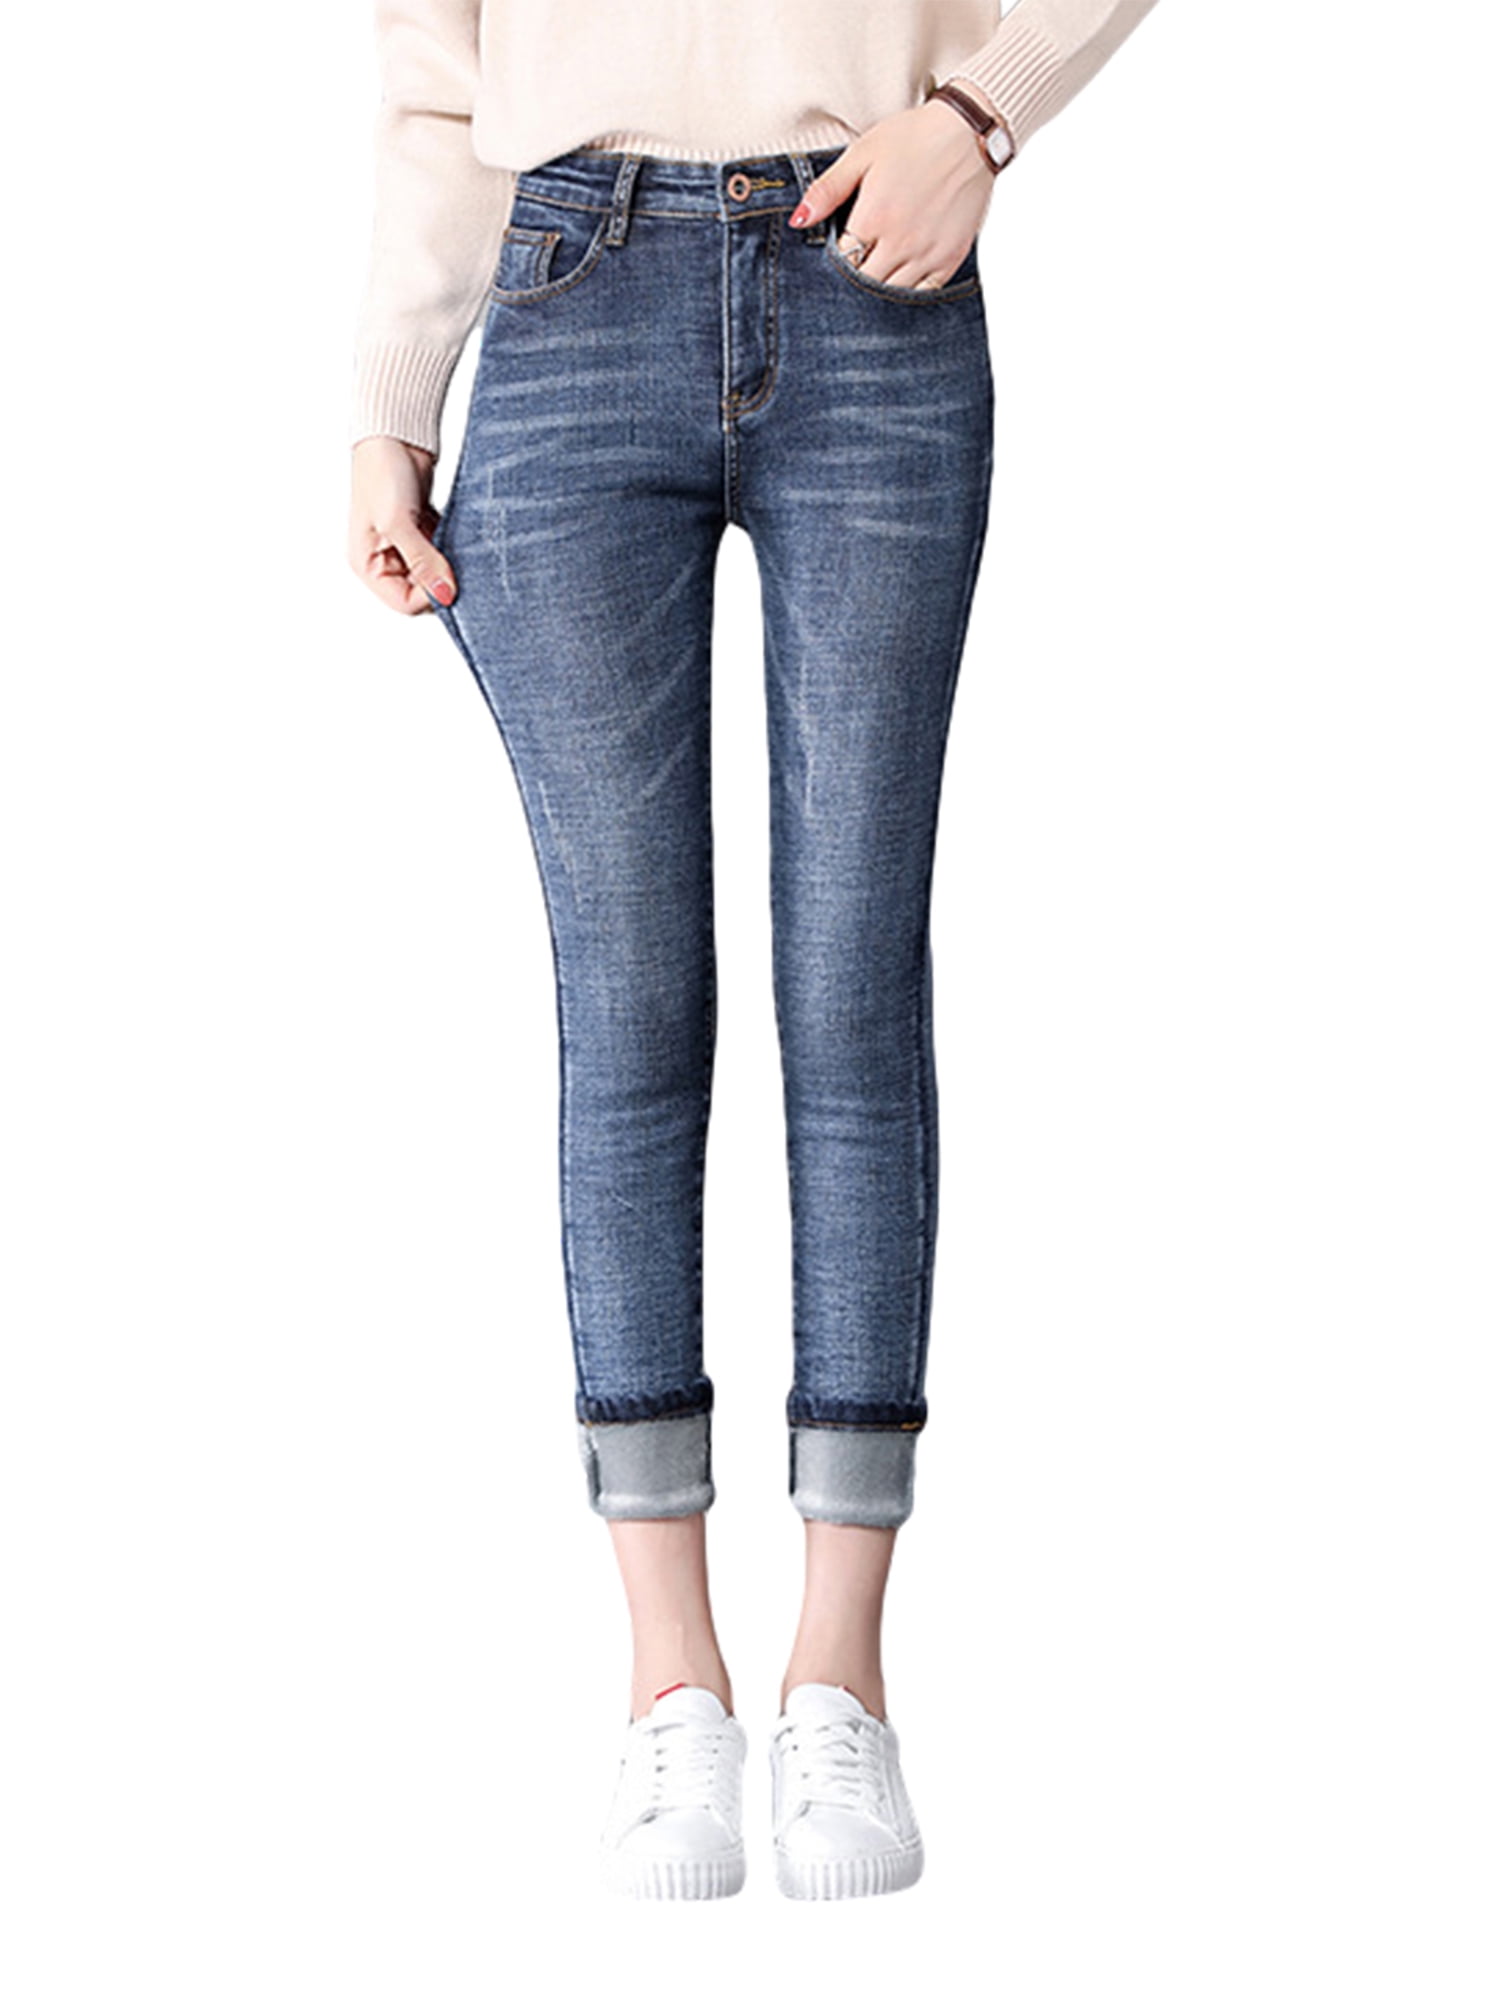 Ladies Jeans High Waist Denim Skinny Pants Stretch Pencil Trousers Slim Fit  Blue | eBay